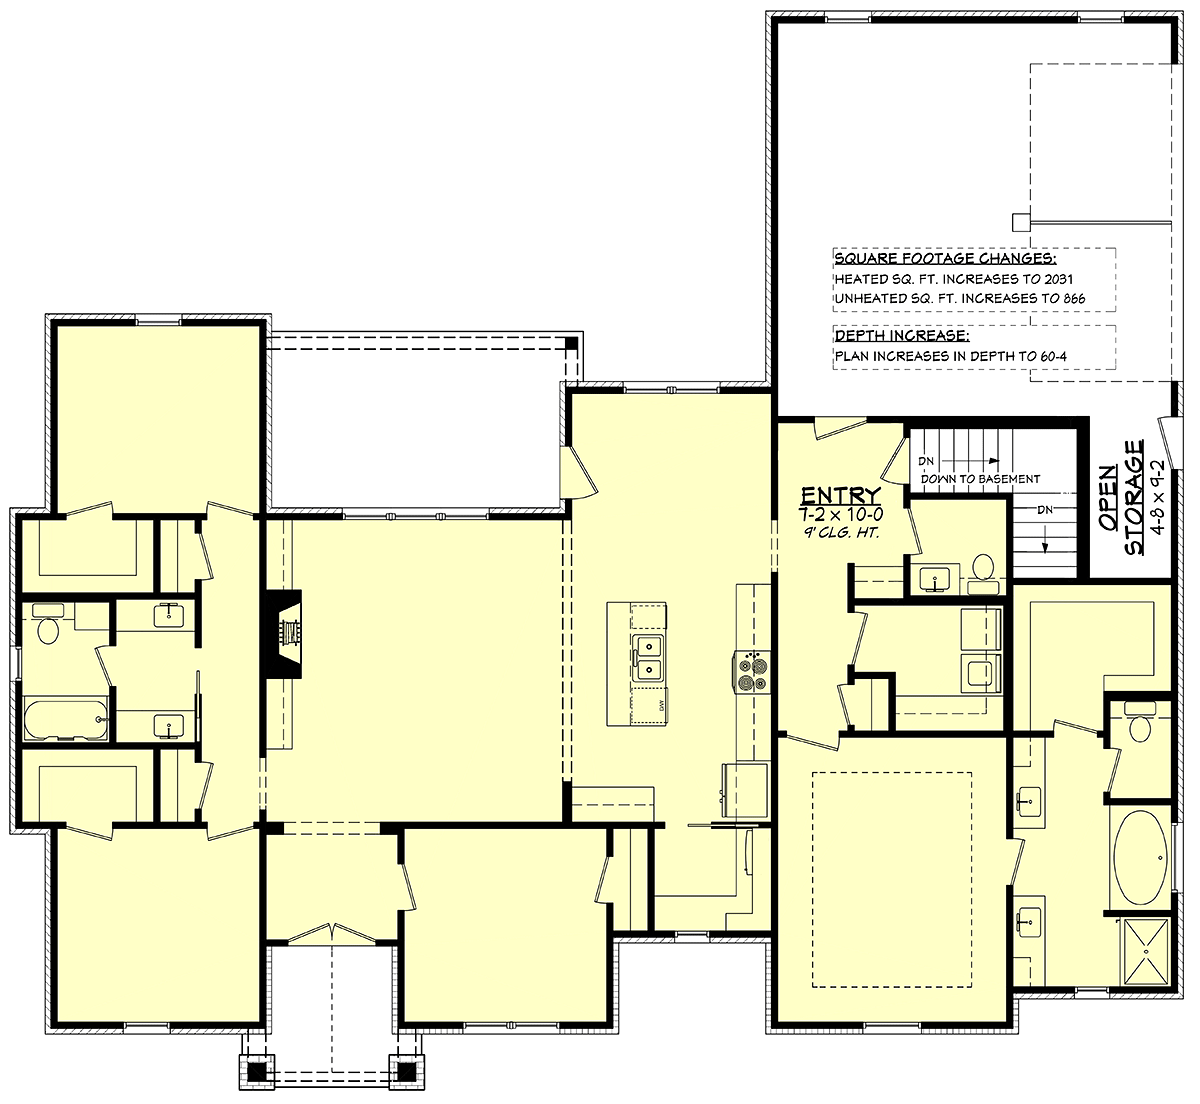 House Plan 80857 Alternate Level One